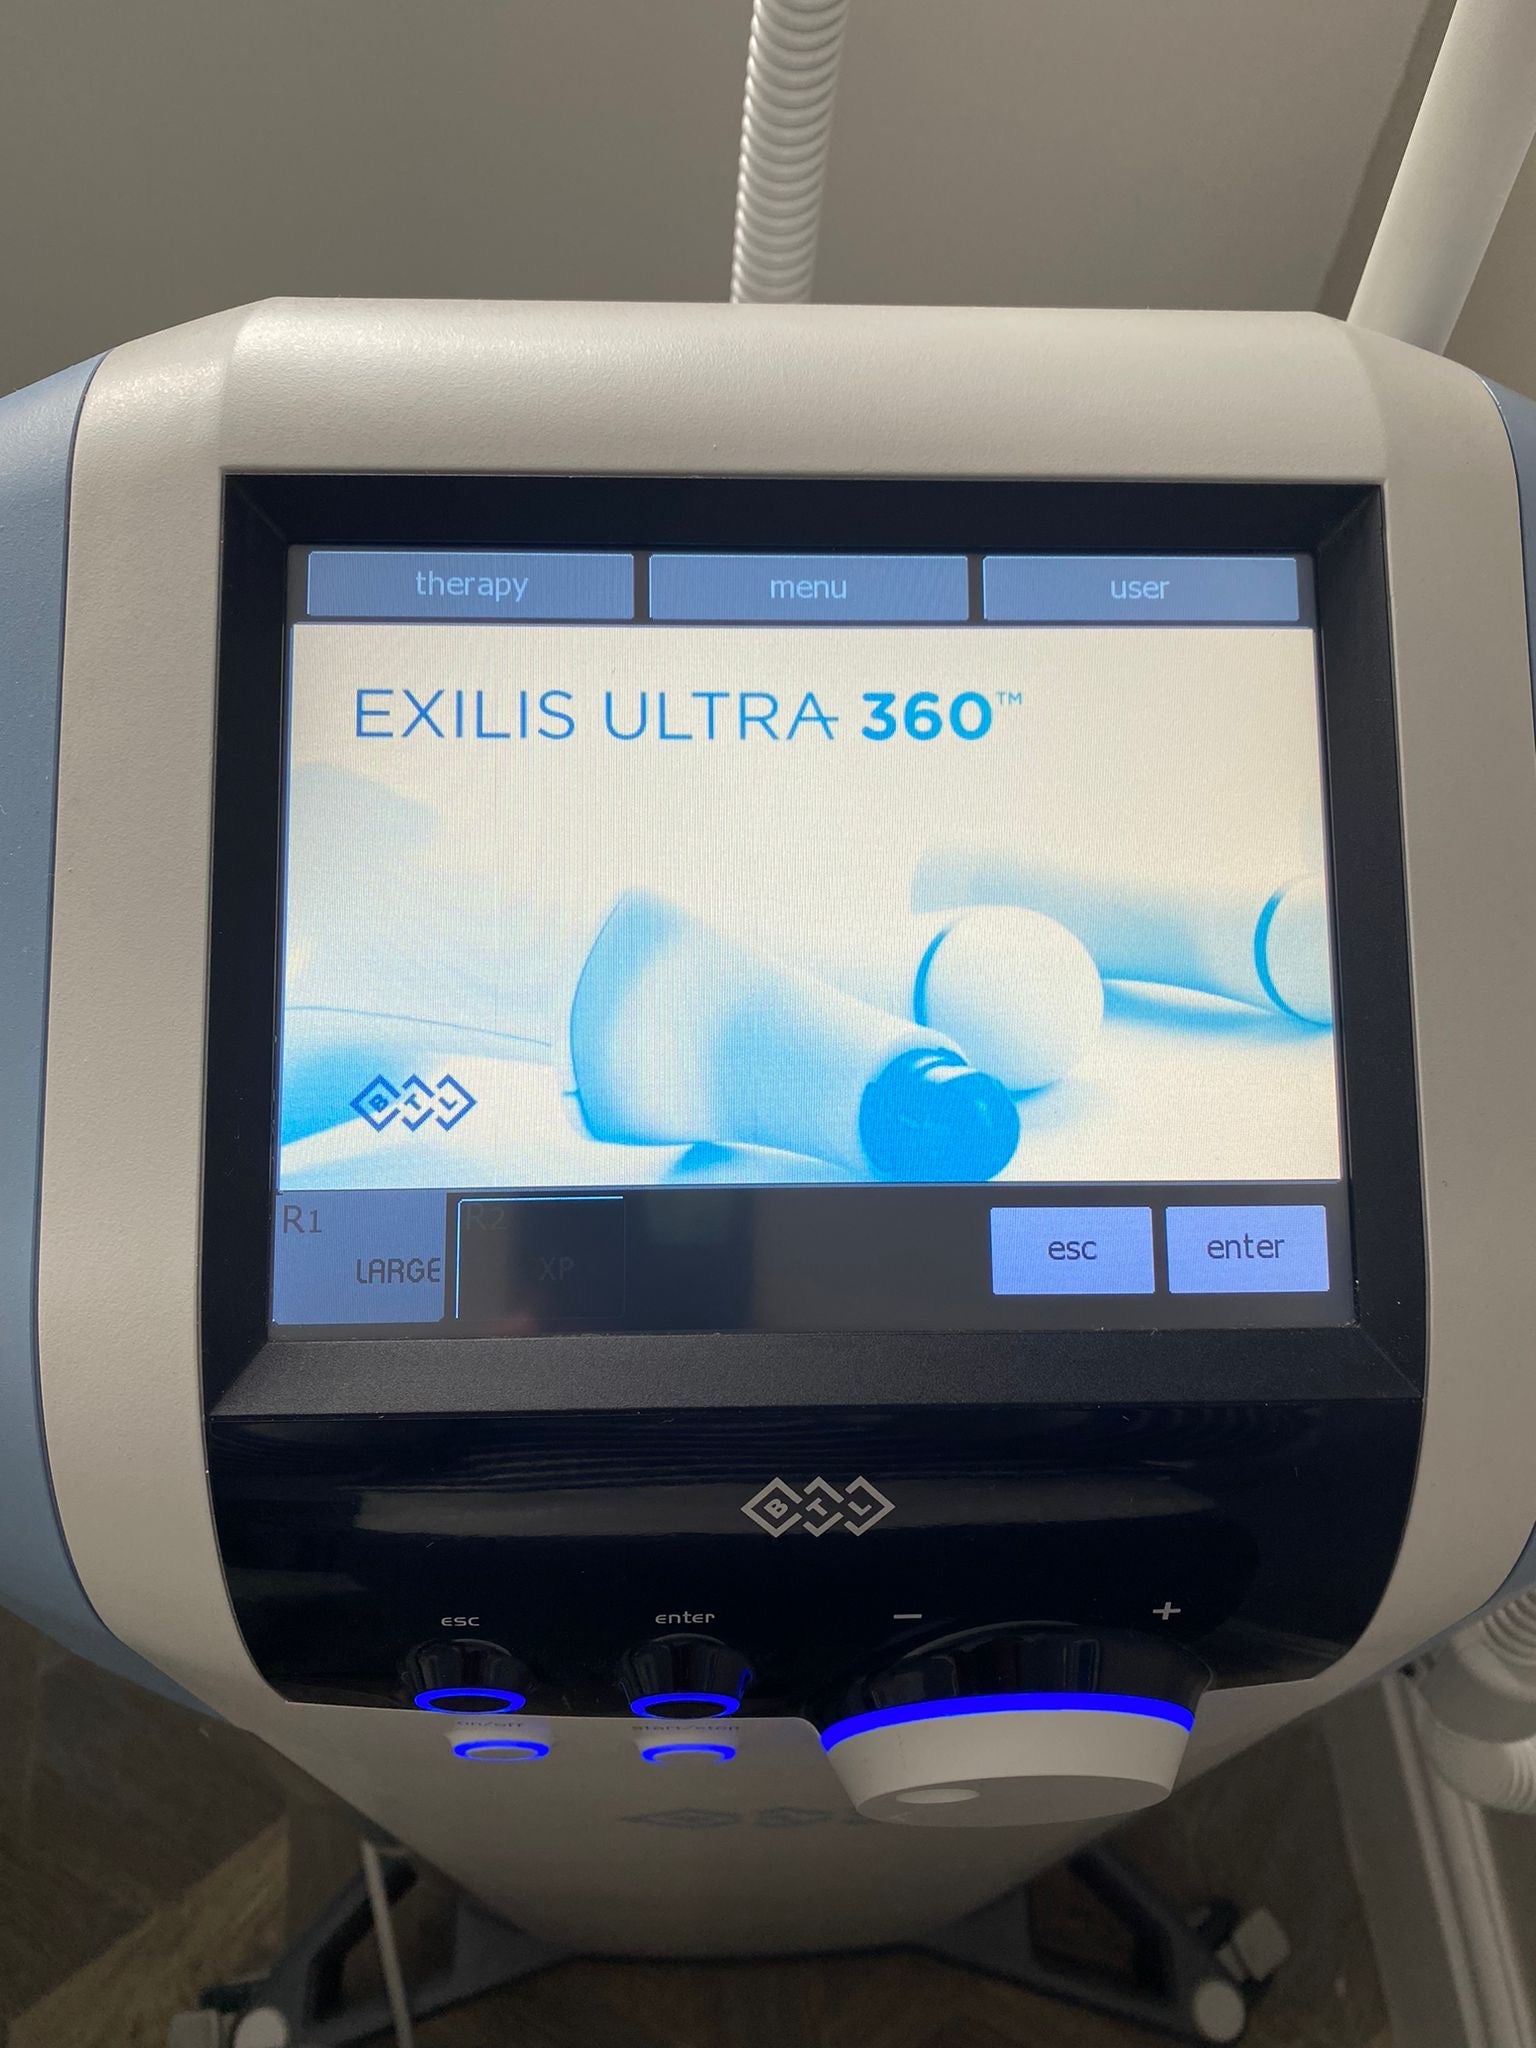 BTL Exilis Ultra 360 machine